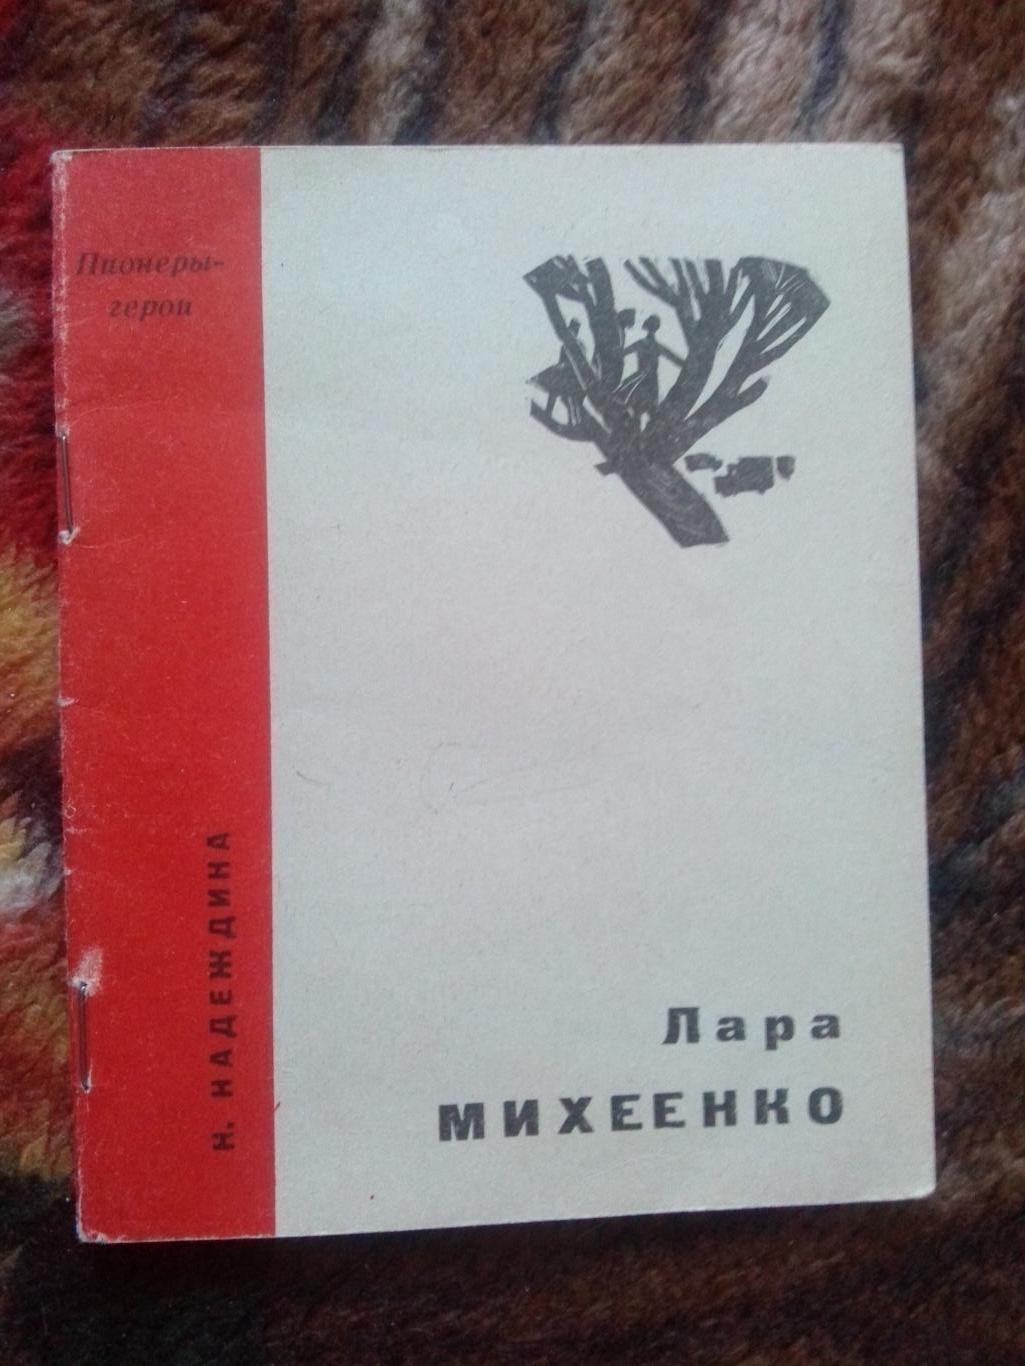 Пионеры-герои (Плакат + брошюра) 1967 г. Лара Михеенко (Пионер , агитация) 3